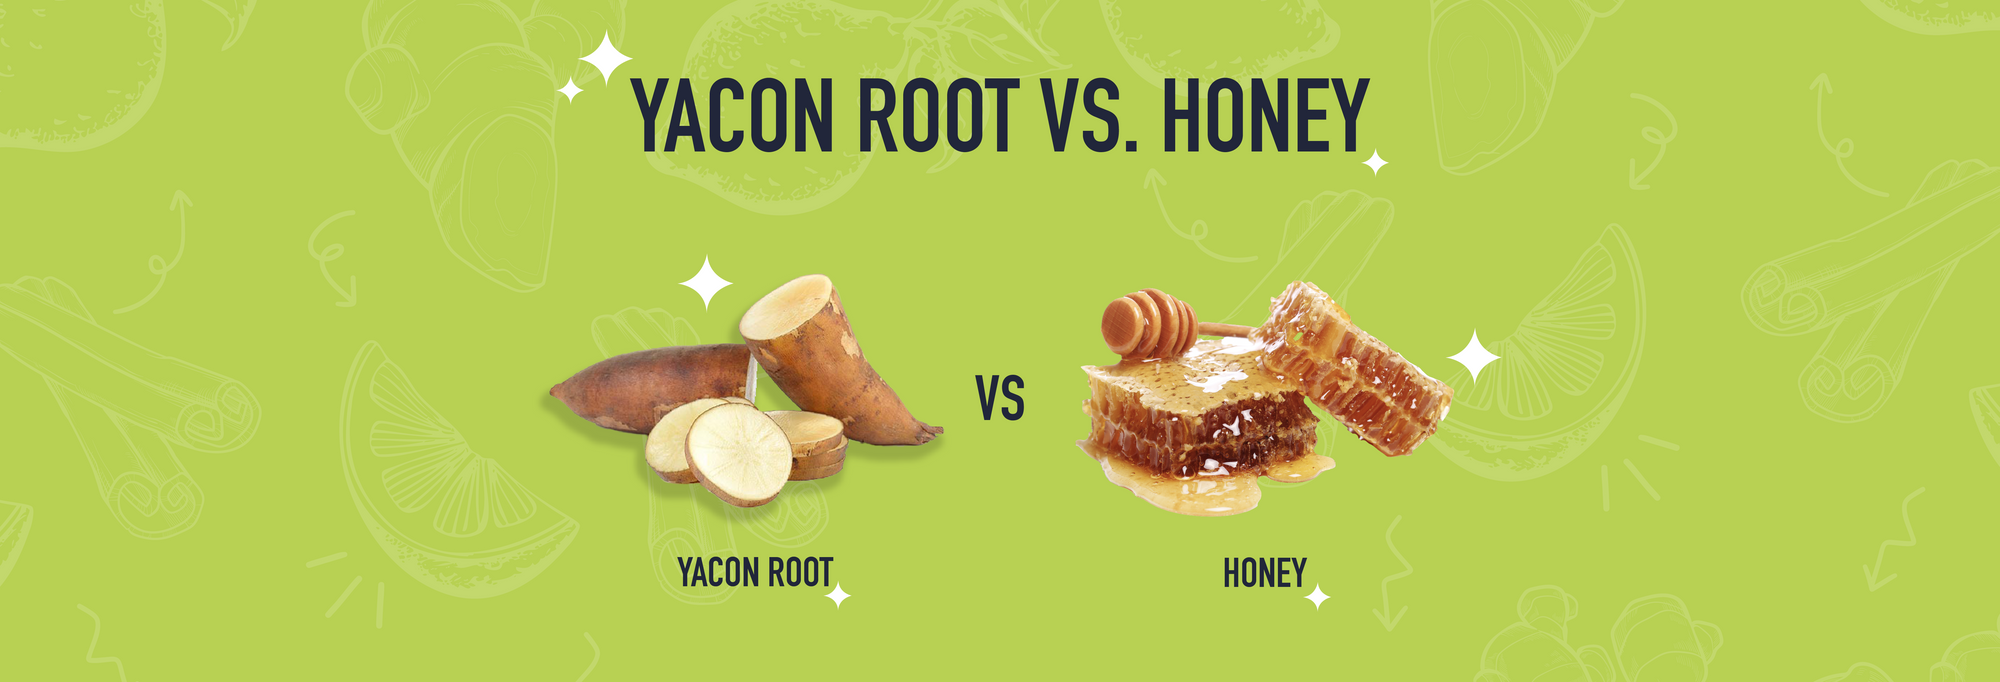 Yacon Root VS Honey - Battling the Sweeteners